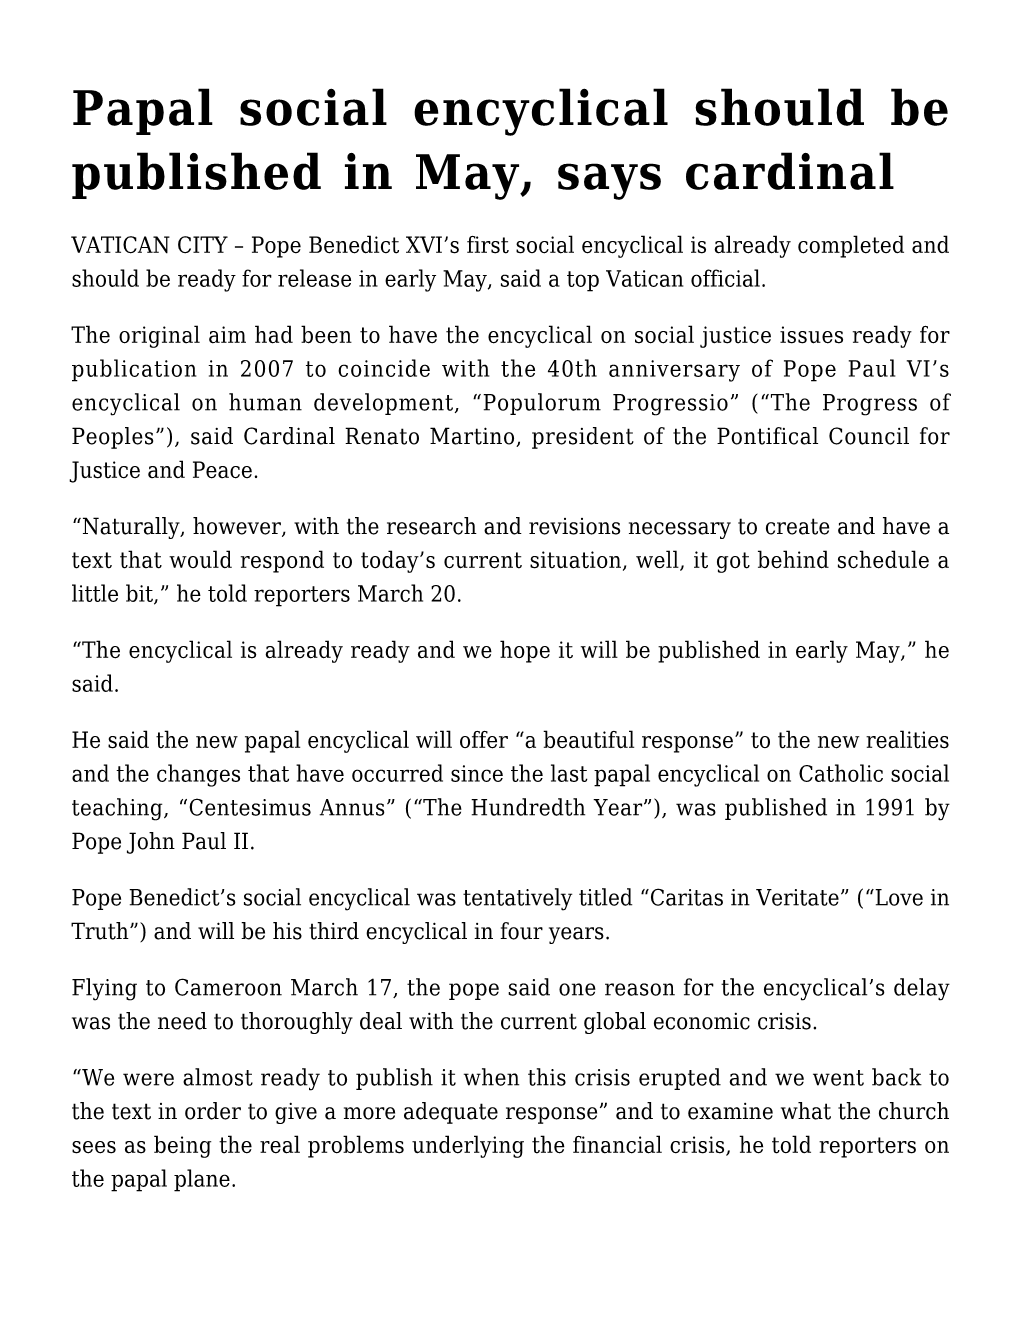 Papal Social Encyclical Should Be Published in May, Says Cardinal